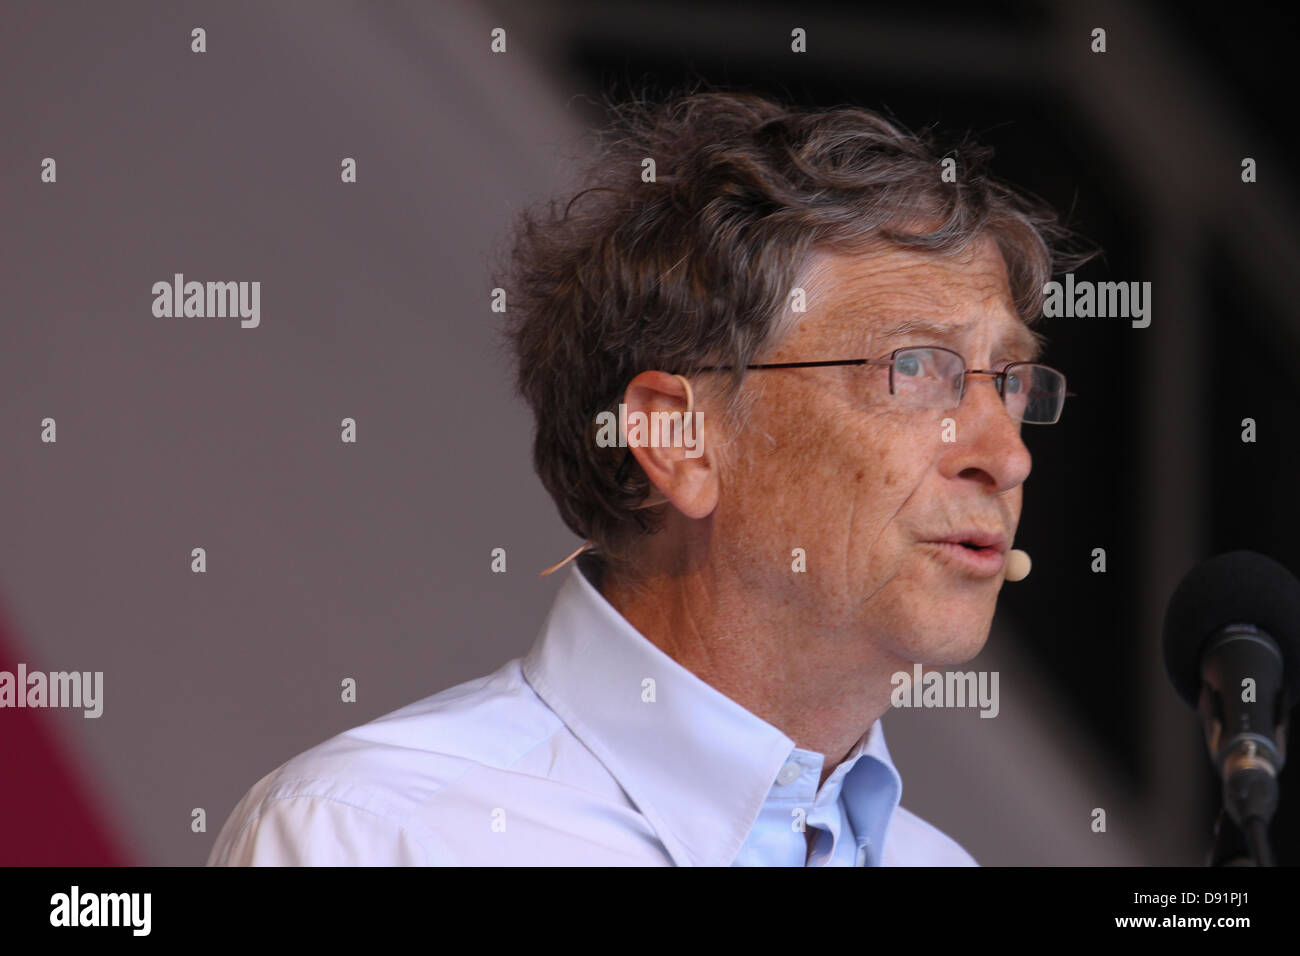 Philanthropist Bill Gates delivers an inspiring speech at the Big If London event Stock Photo